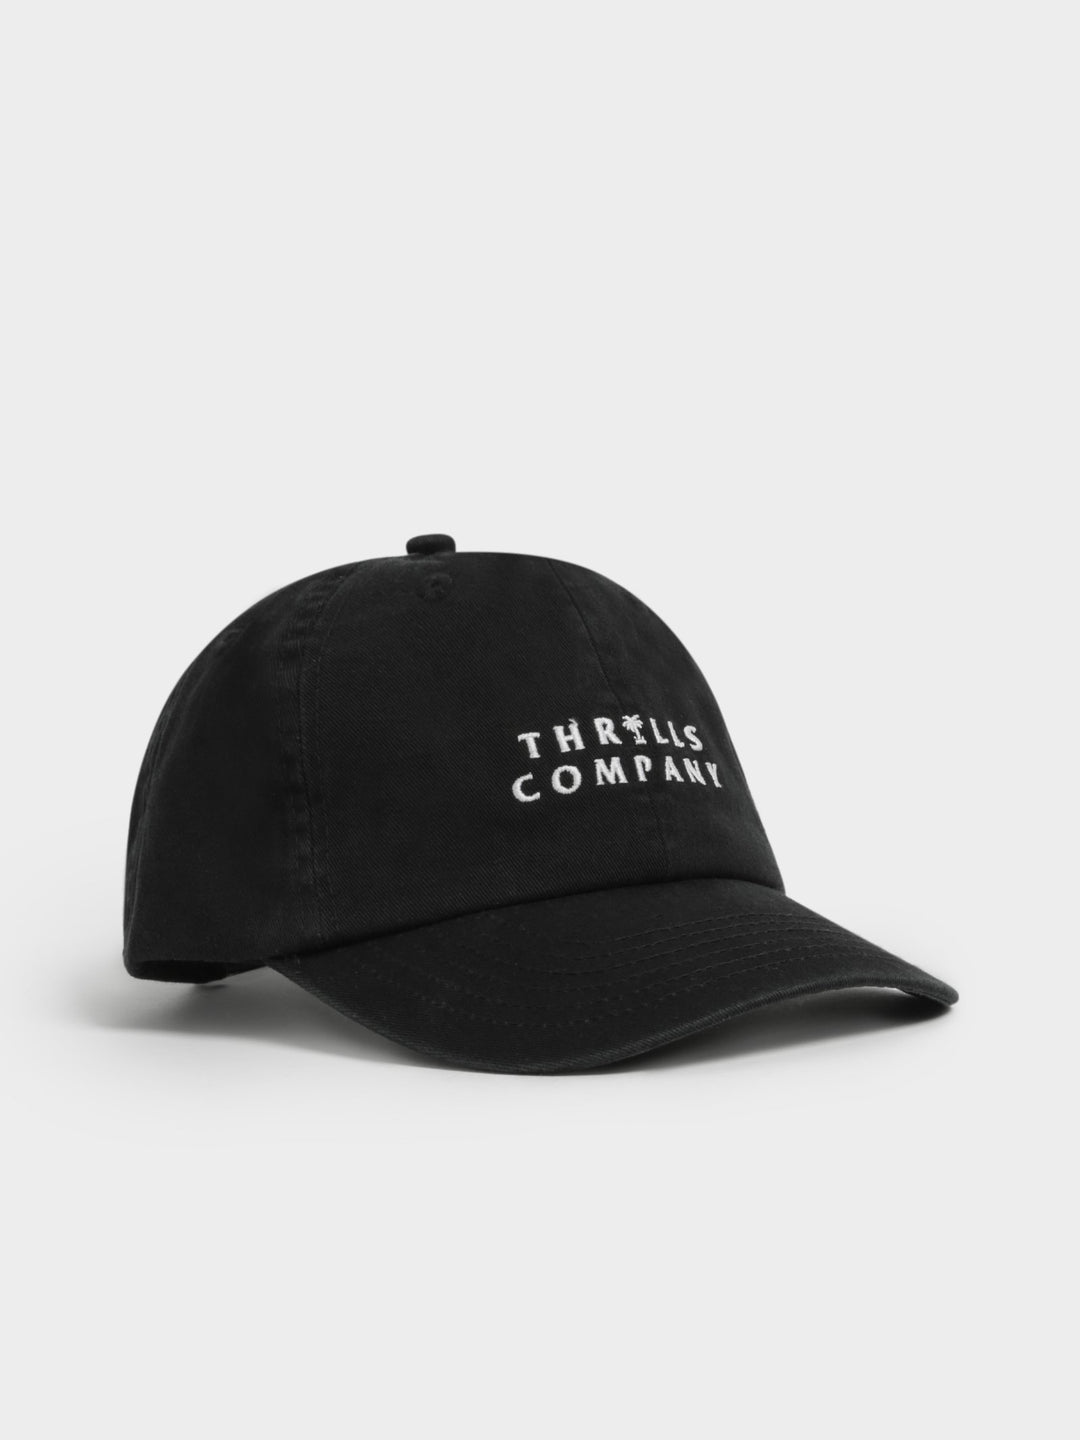 Palmed Thrills Company Cap -  Black